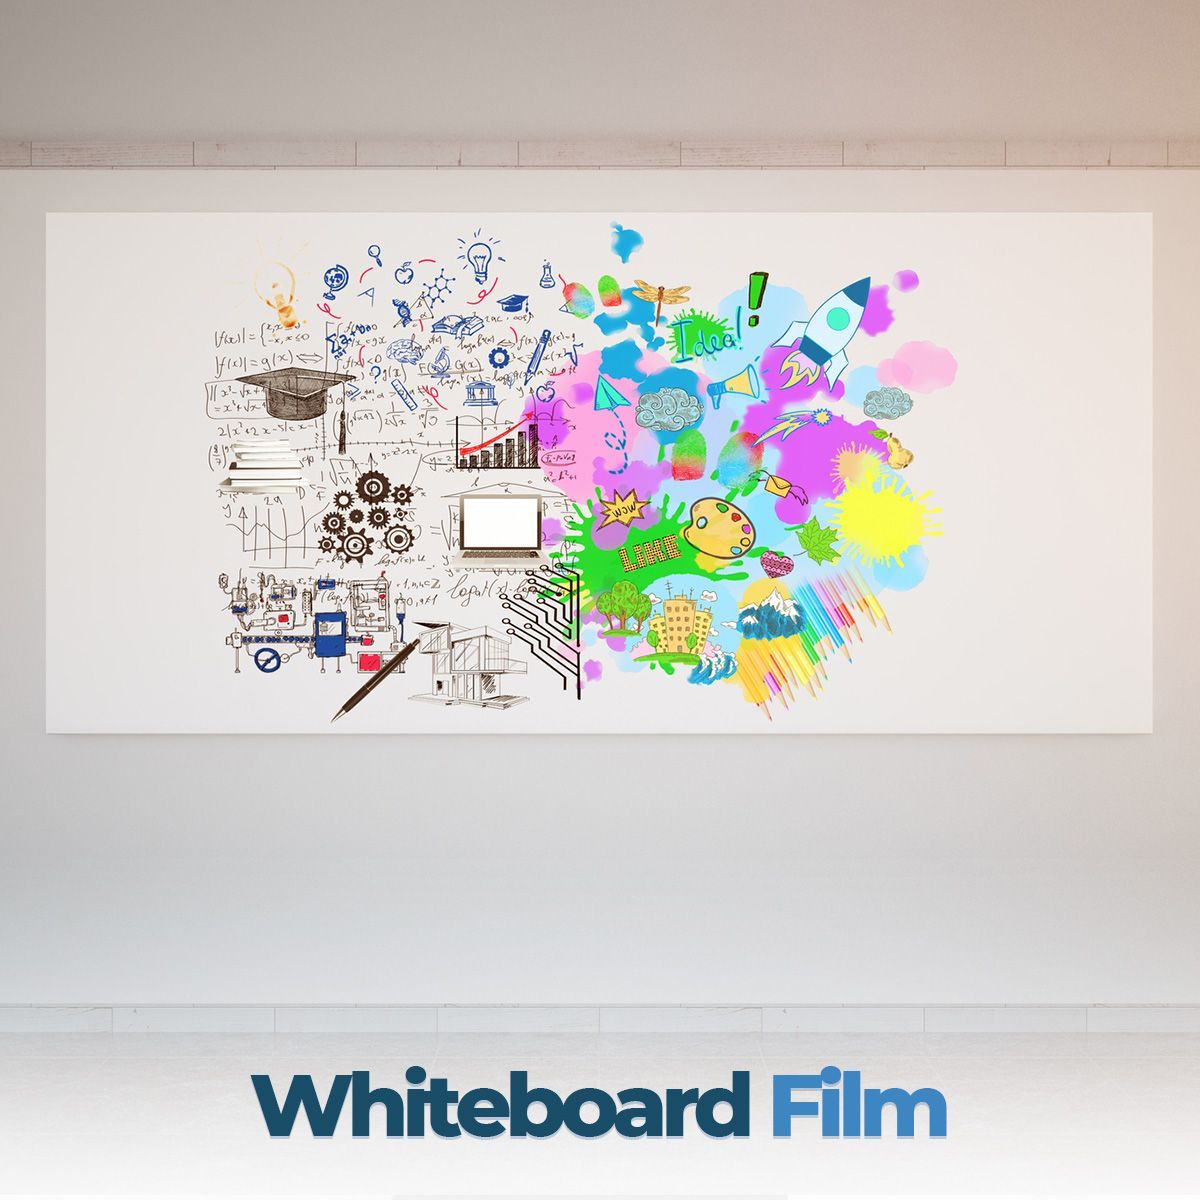 Whiteboard Film